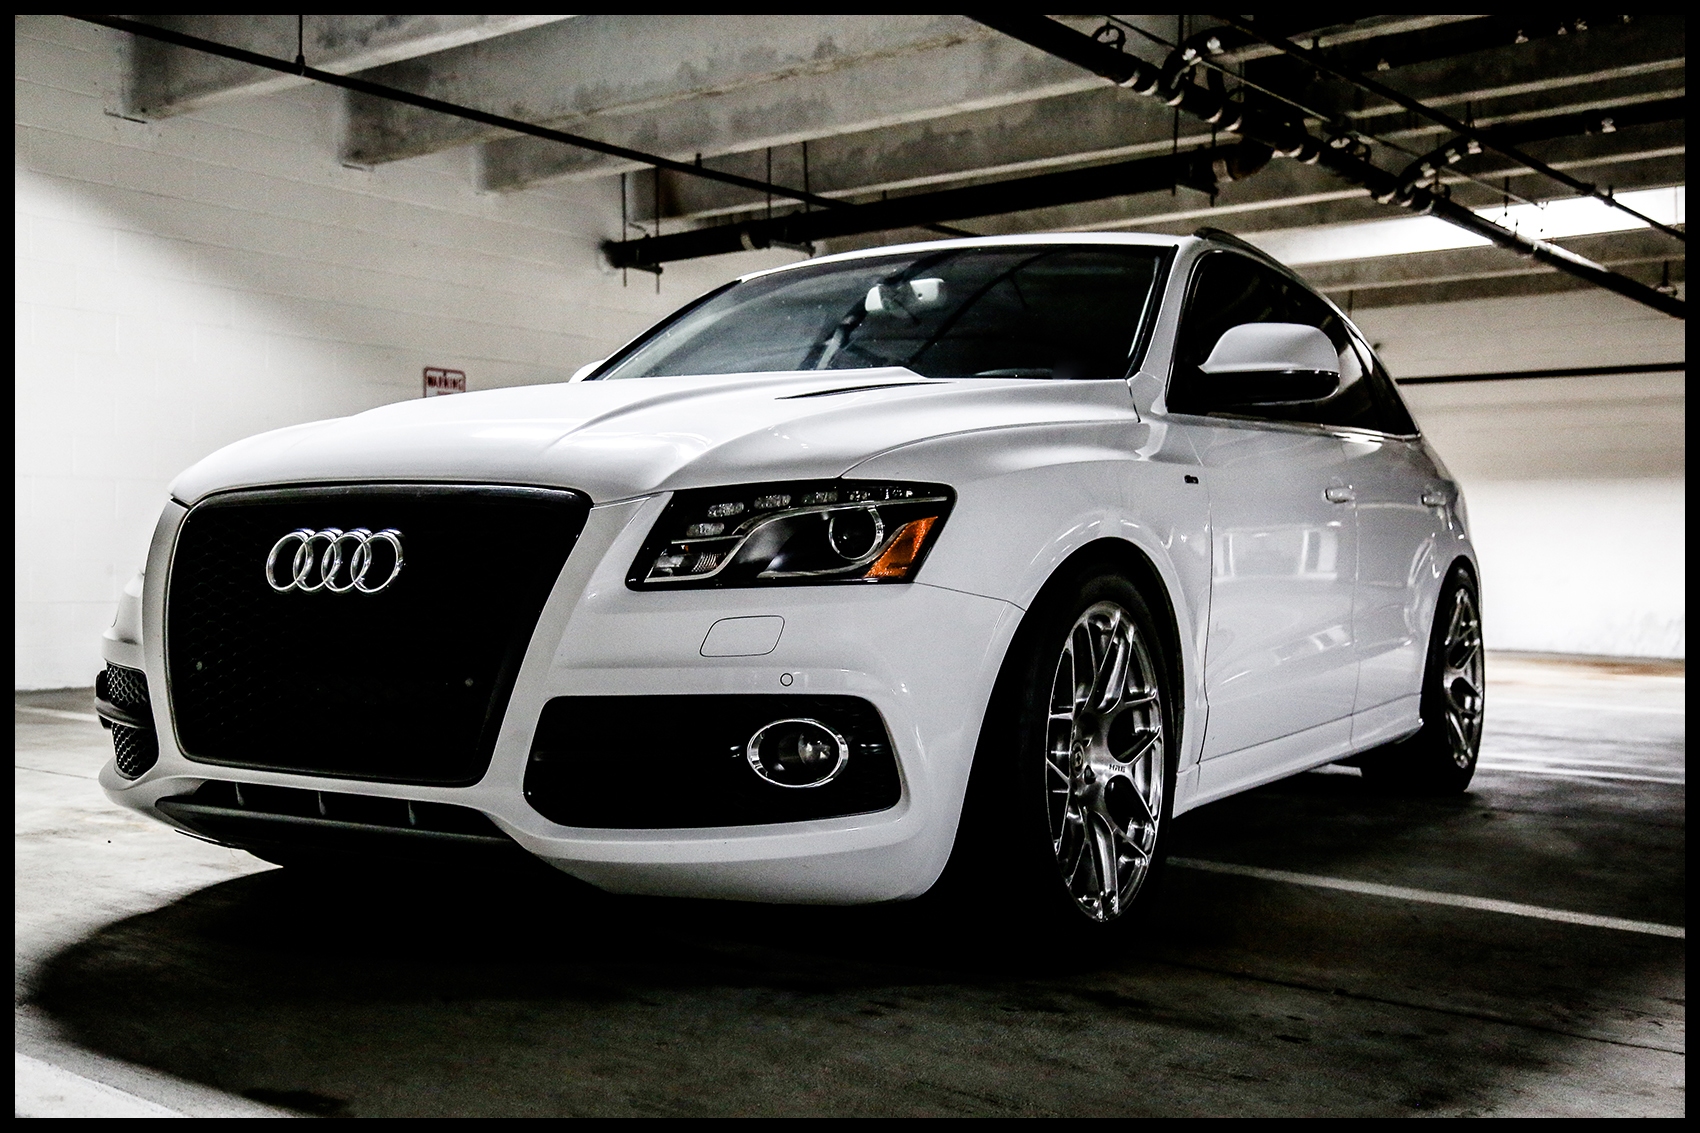 image for larger version Name 4 Audi Q5 2011 White